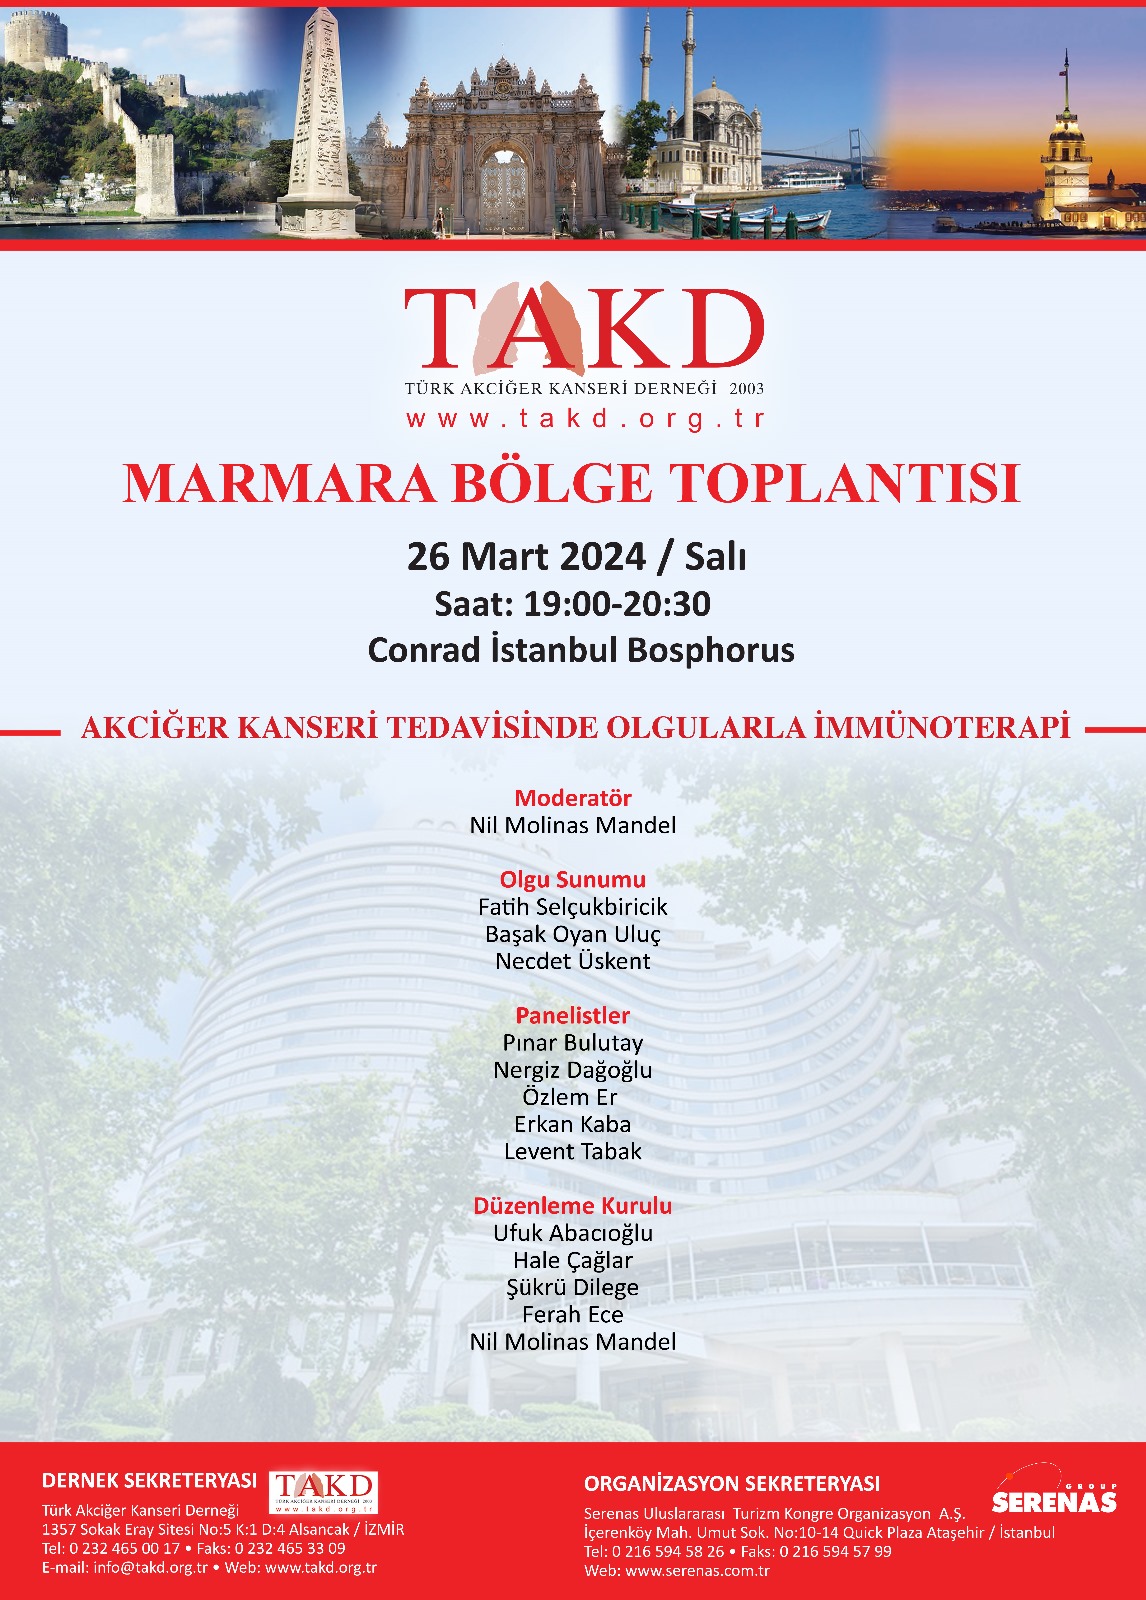 26 Mart 2024,Marmara Bölge Toplantısı,İstanbul